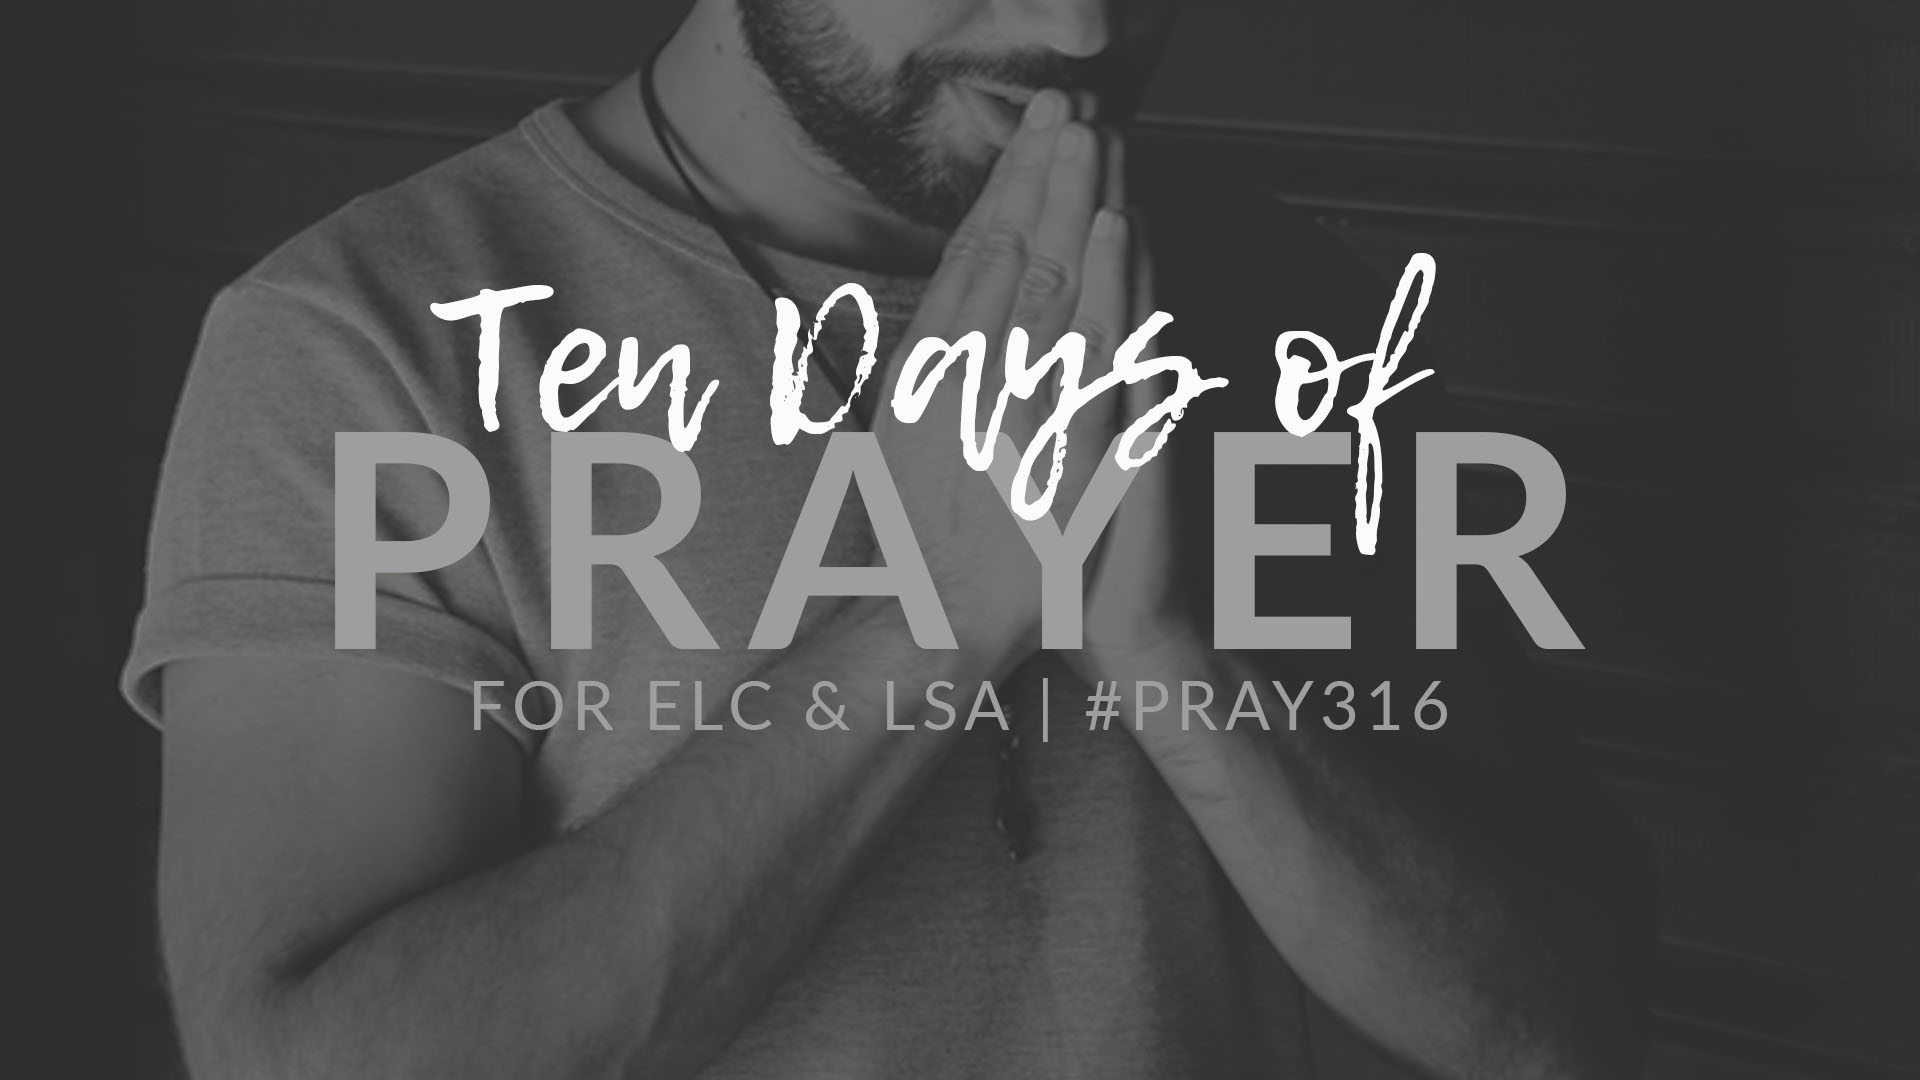 #PRAY316 – Ten Days of Prayer